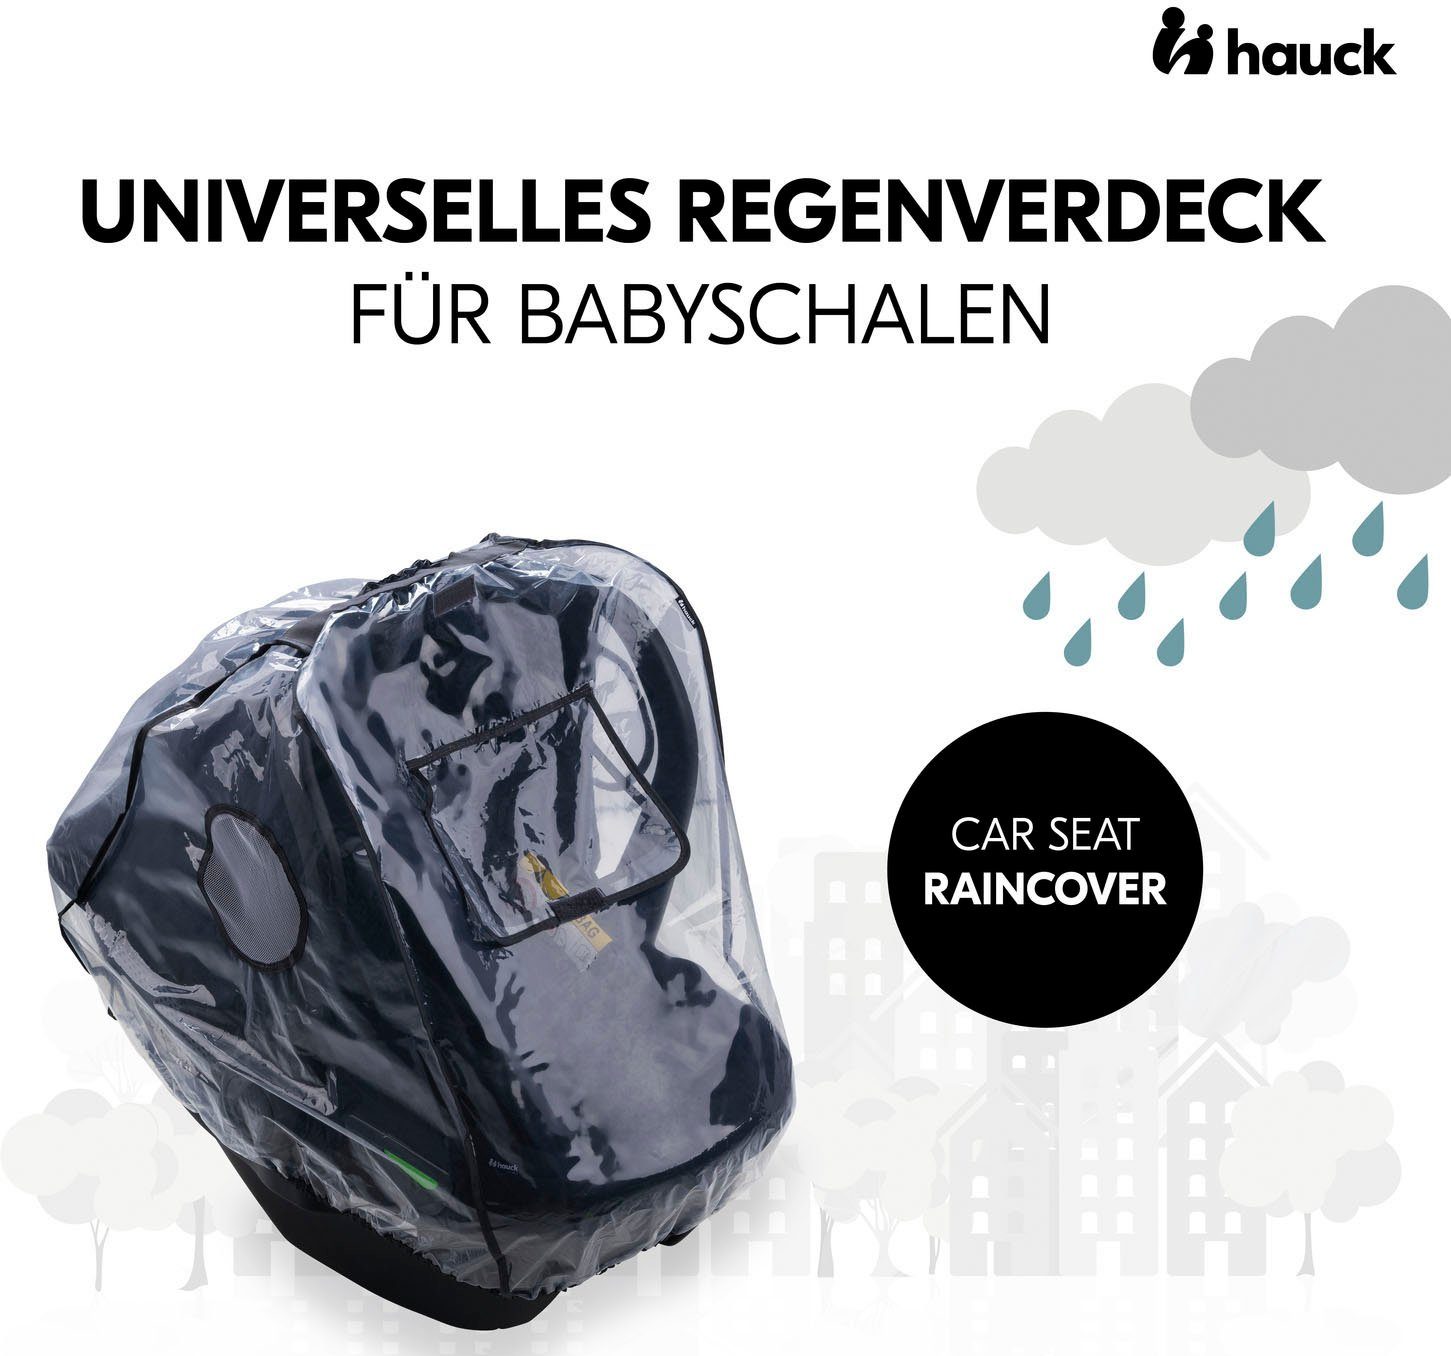 Regenverdeck Hauck Seat universal Car Raincover,